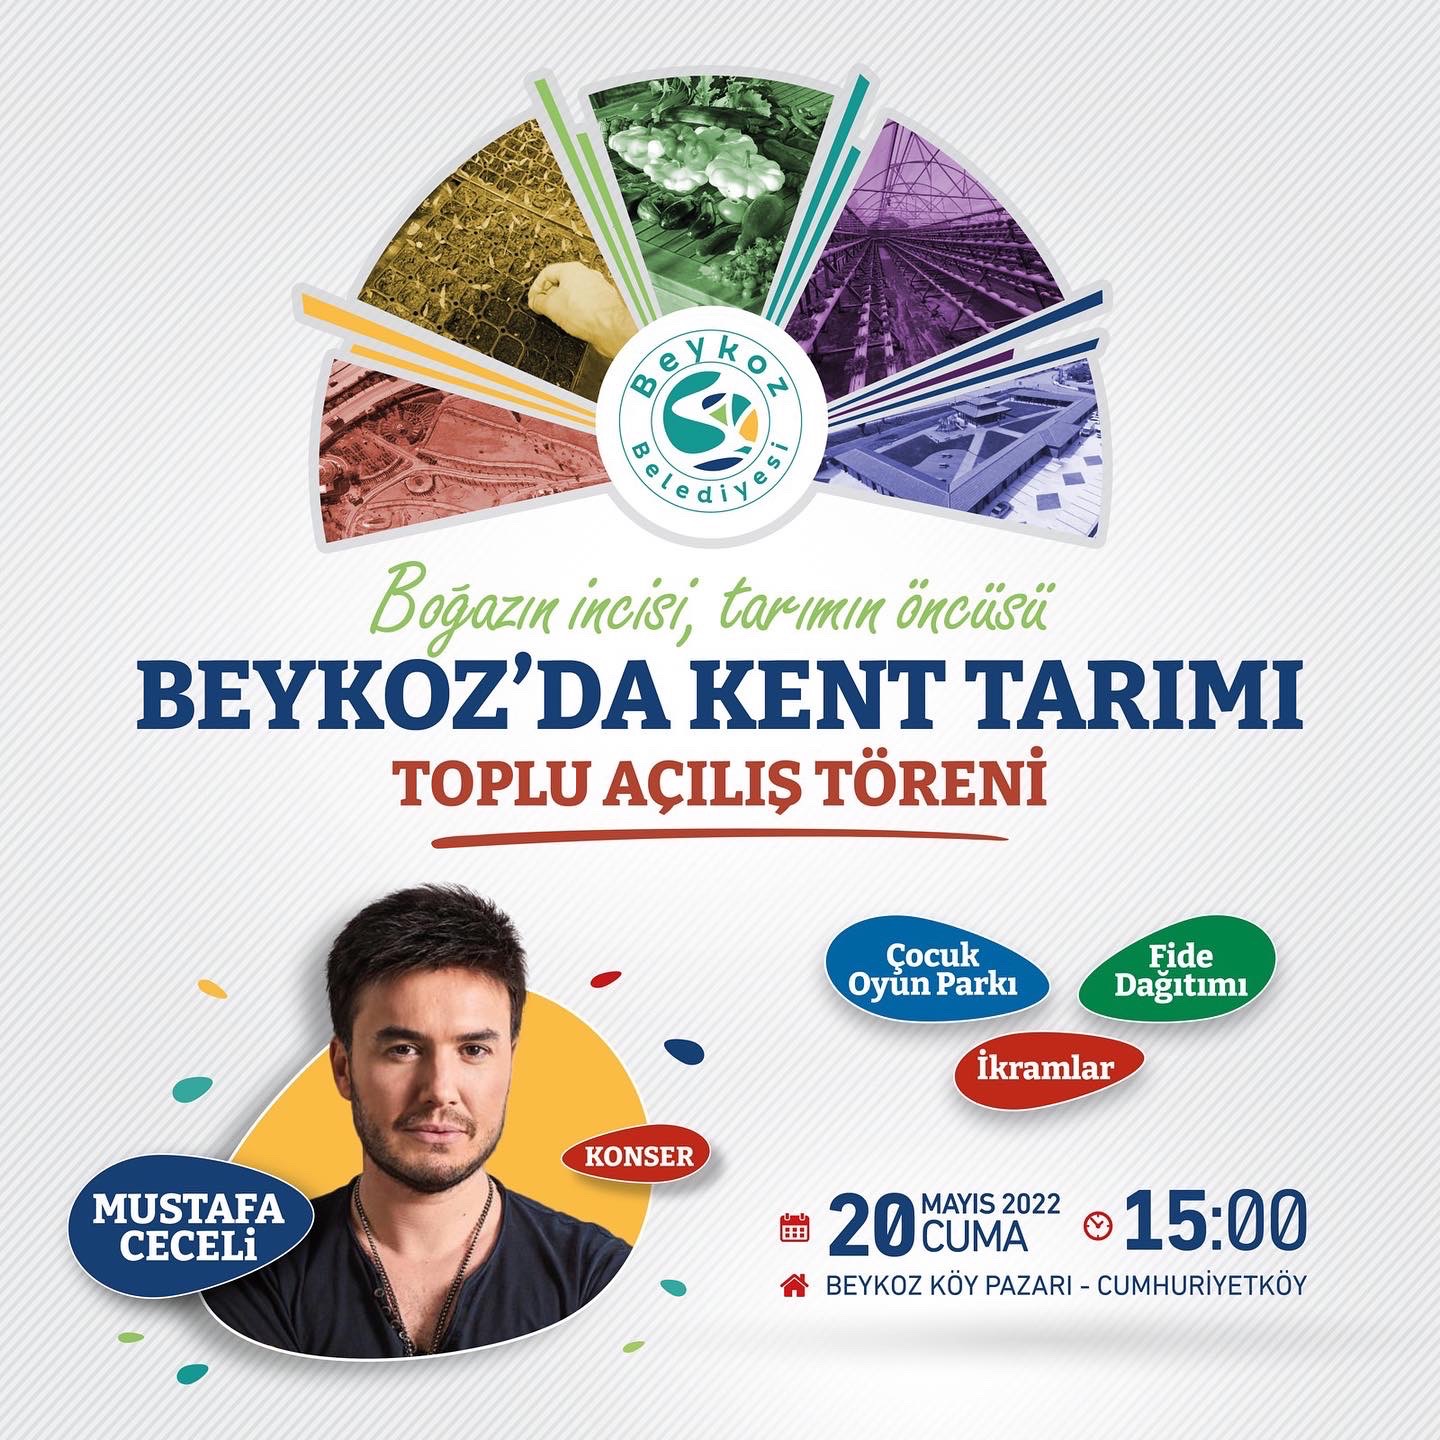 Mustafa Ceceli Konseri Ücretsiz